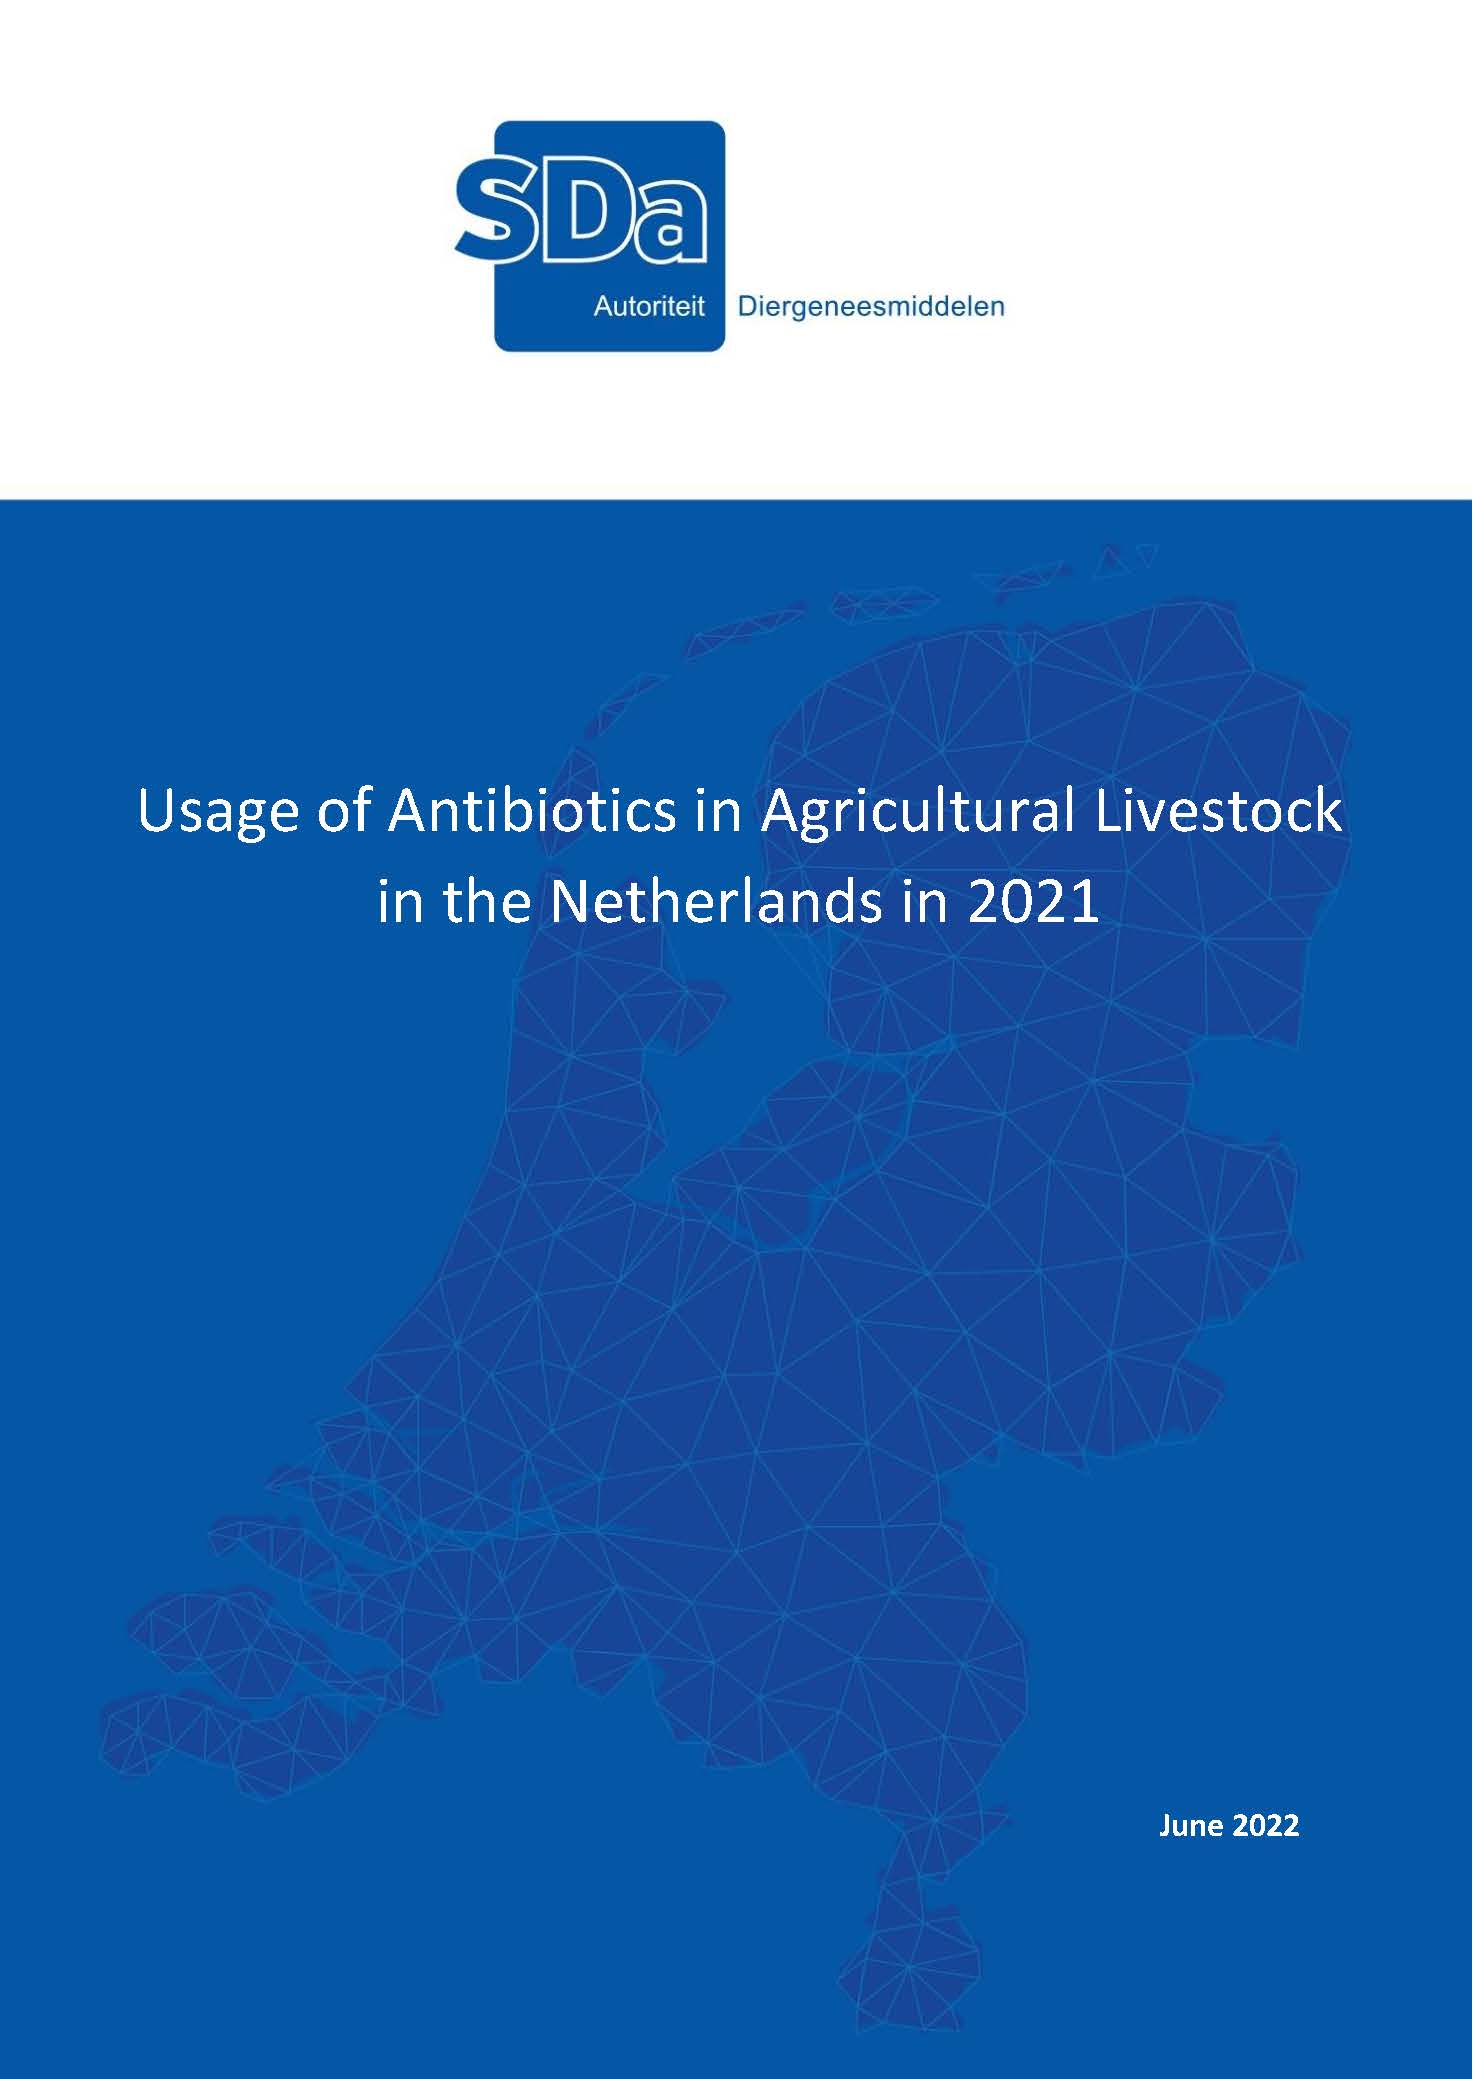 SDa-report 'Usage of antibiotics livestock in the Netherlands in 2021'
